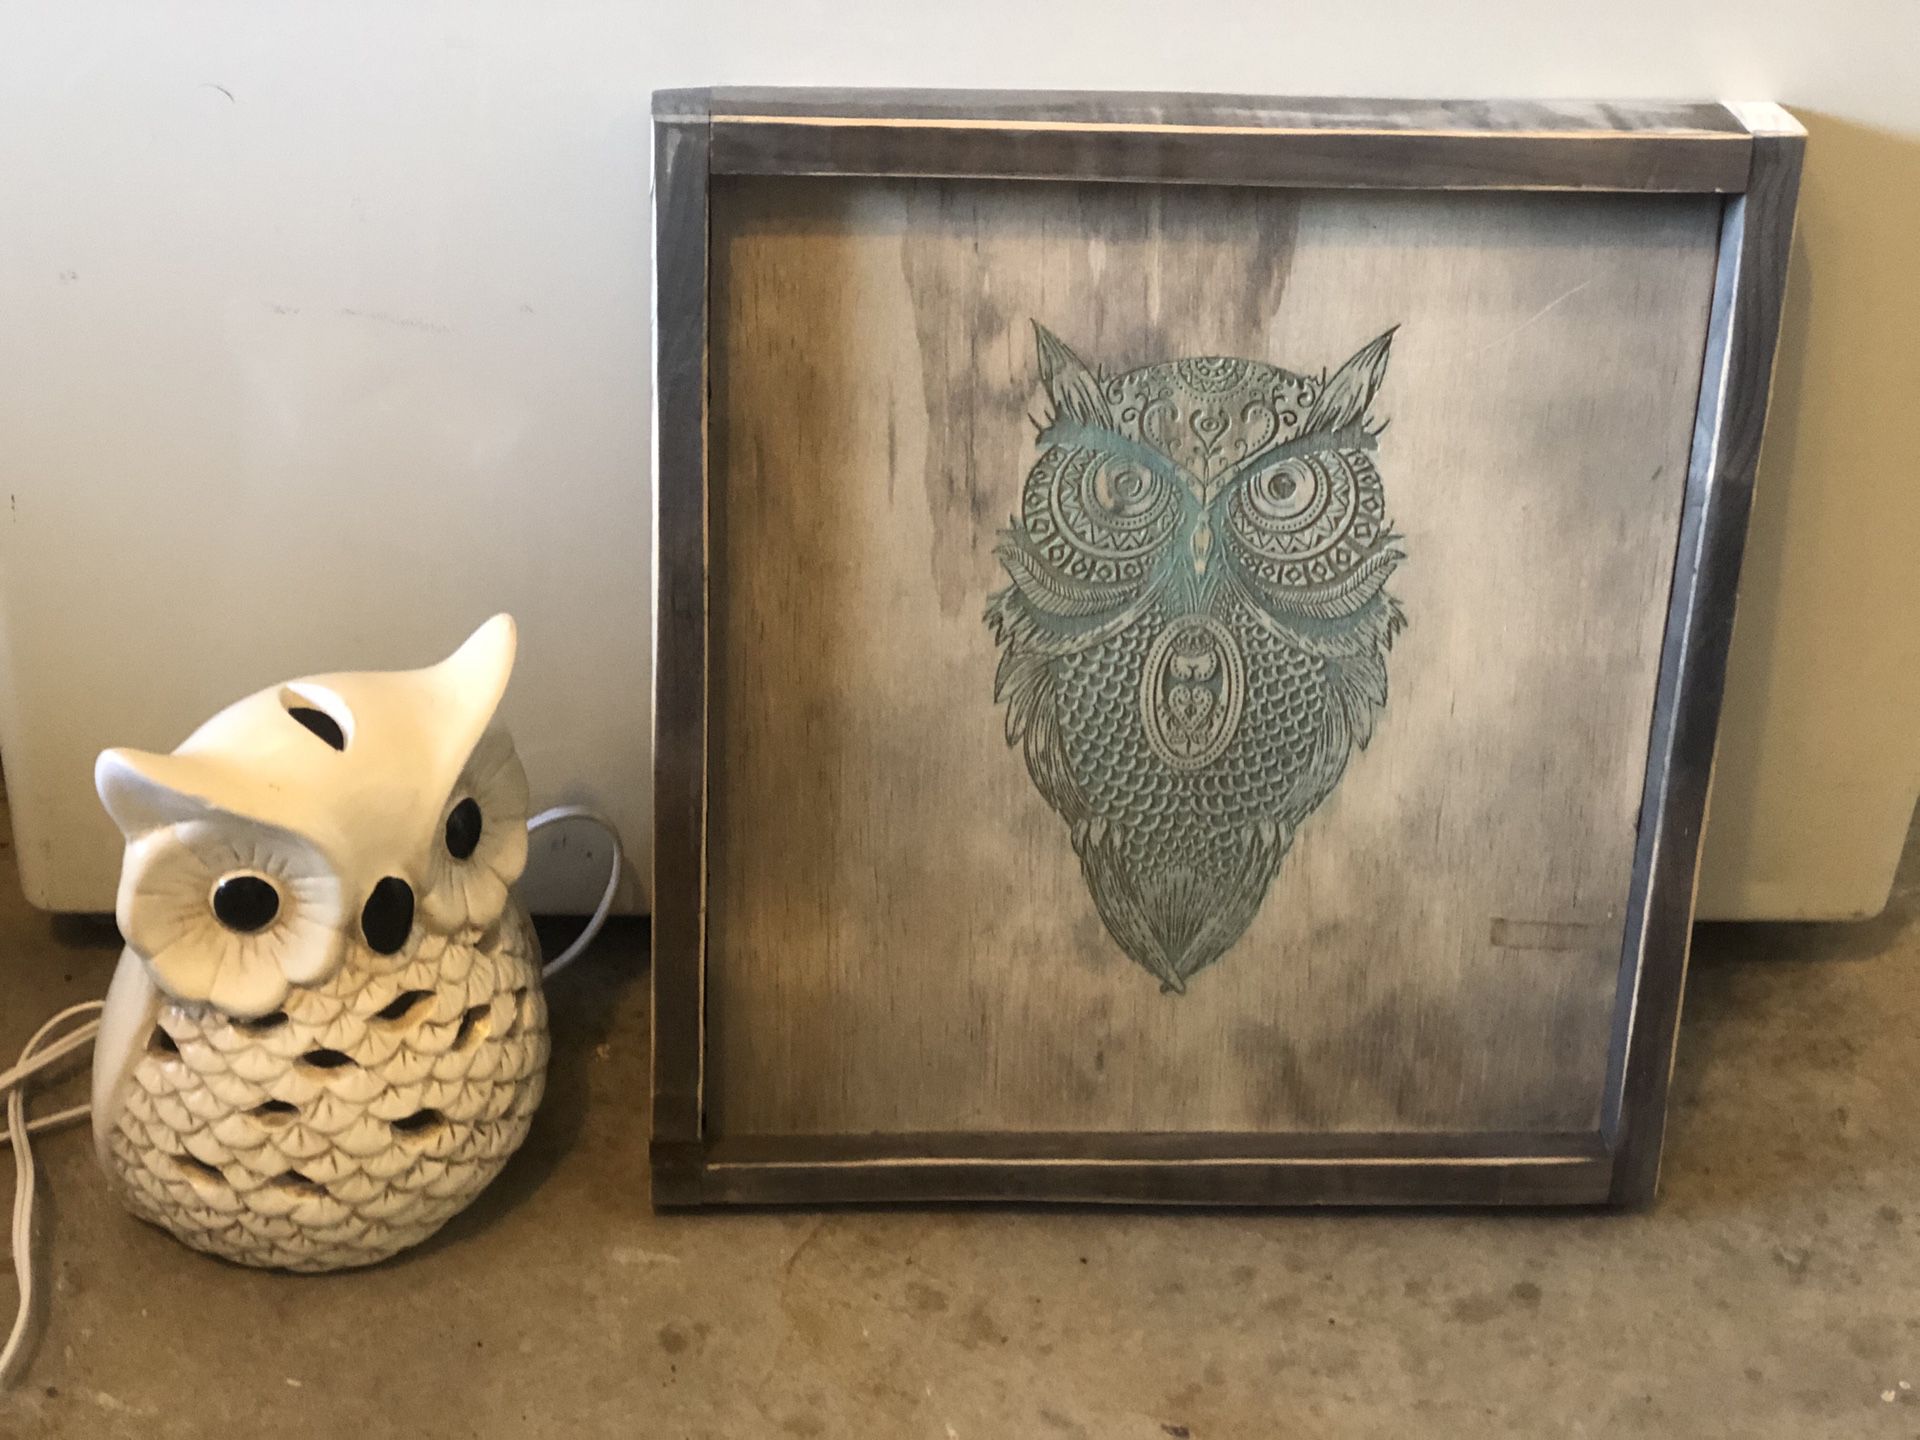 Owl Decor / Nightlight